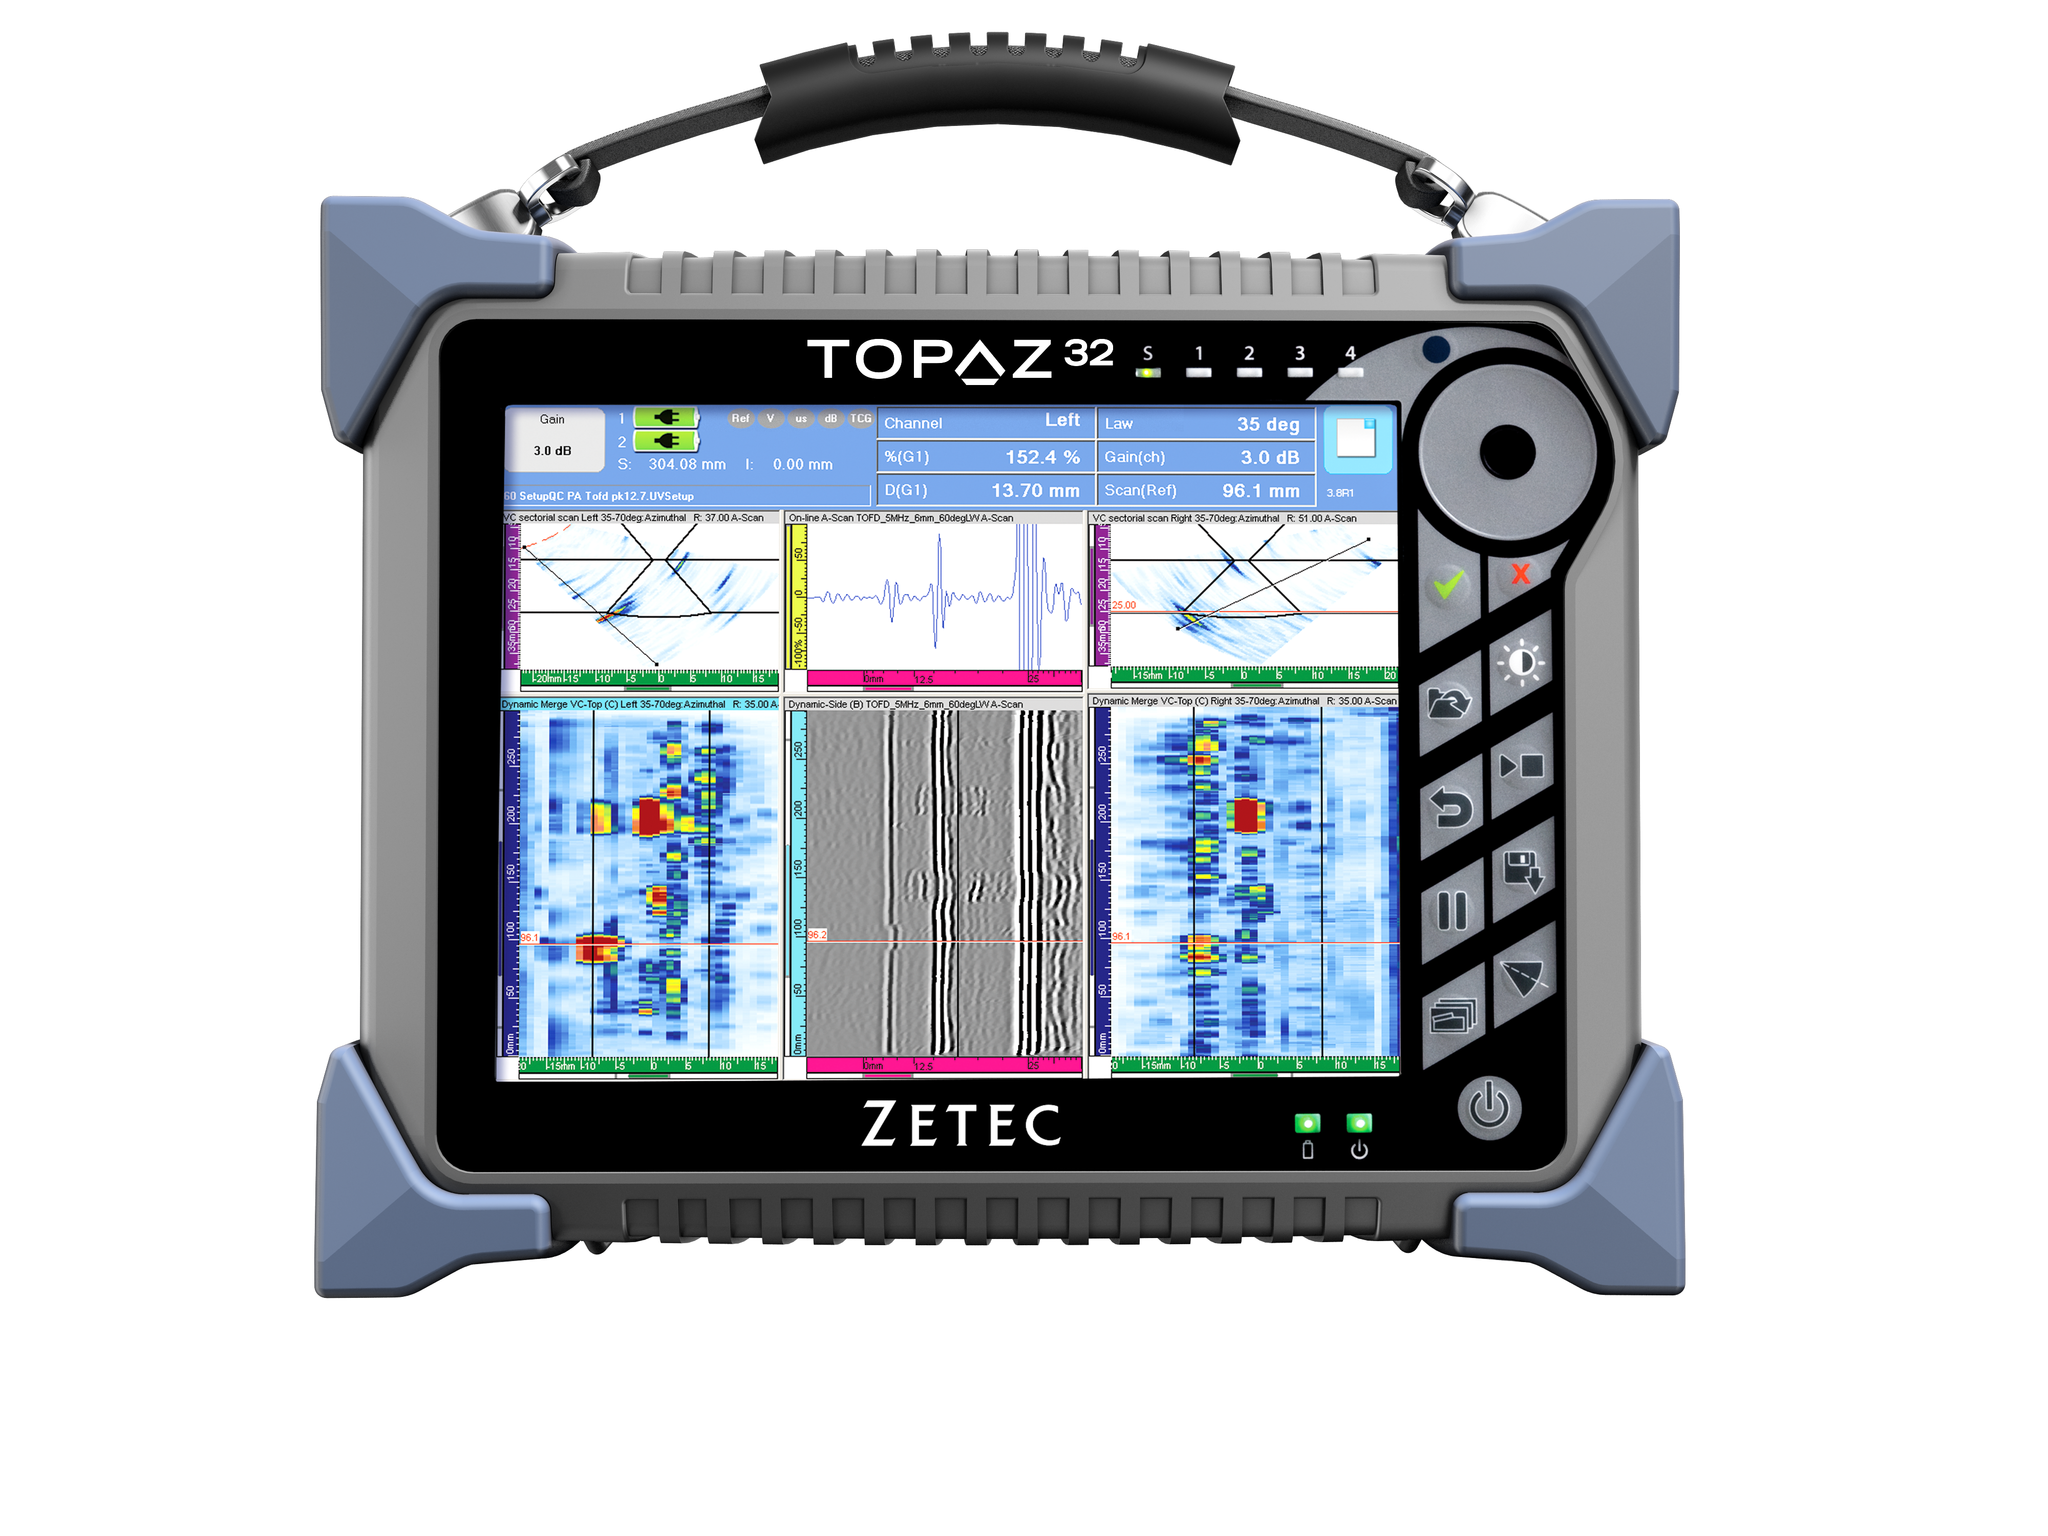 Zetec Topaz32 Portable 32 Channel Phased Array UT Instrument